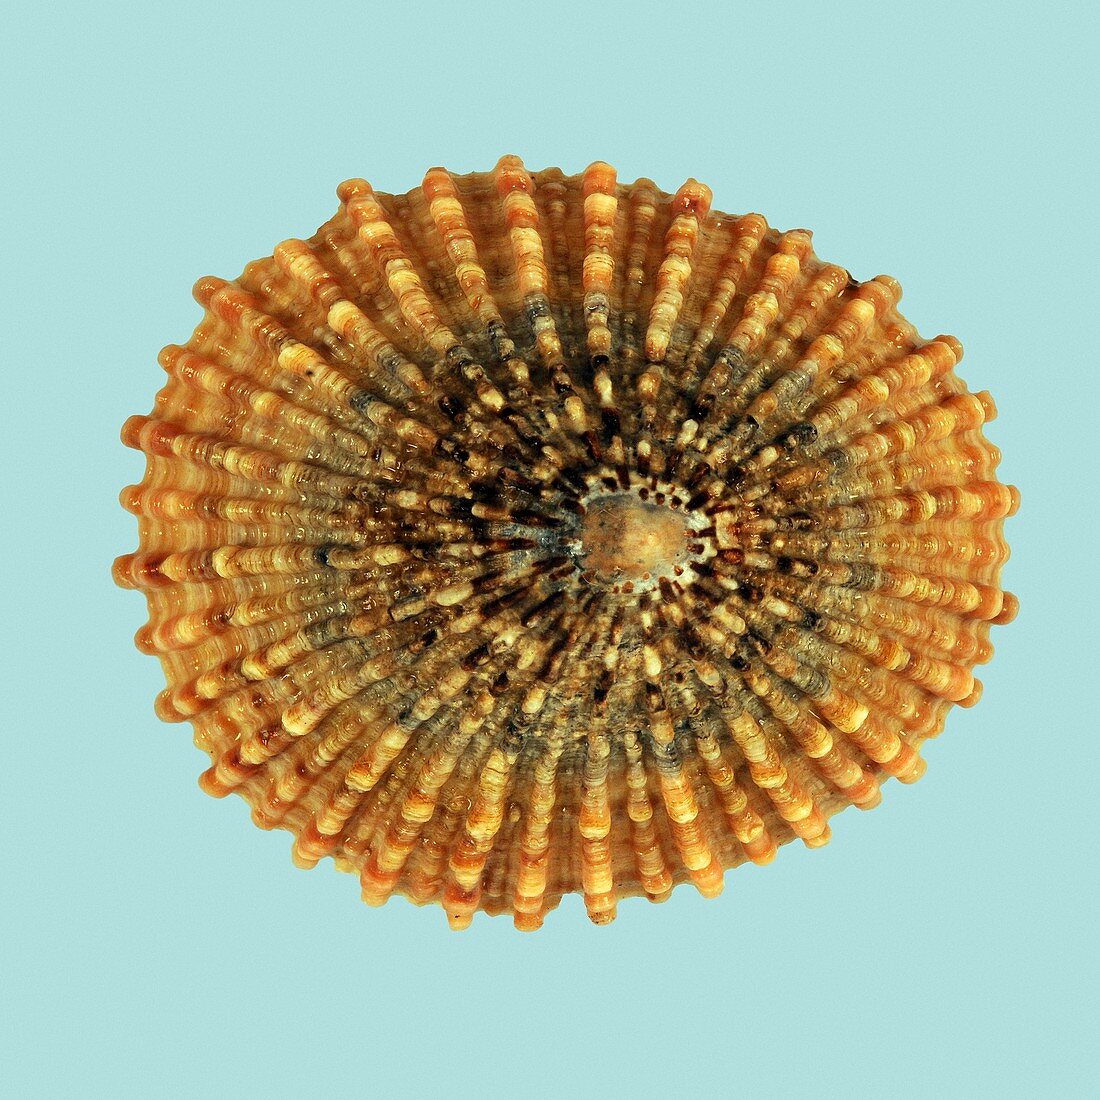 Cellana mazatlandica limpet shell